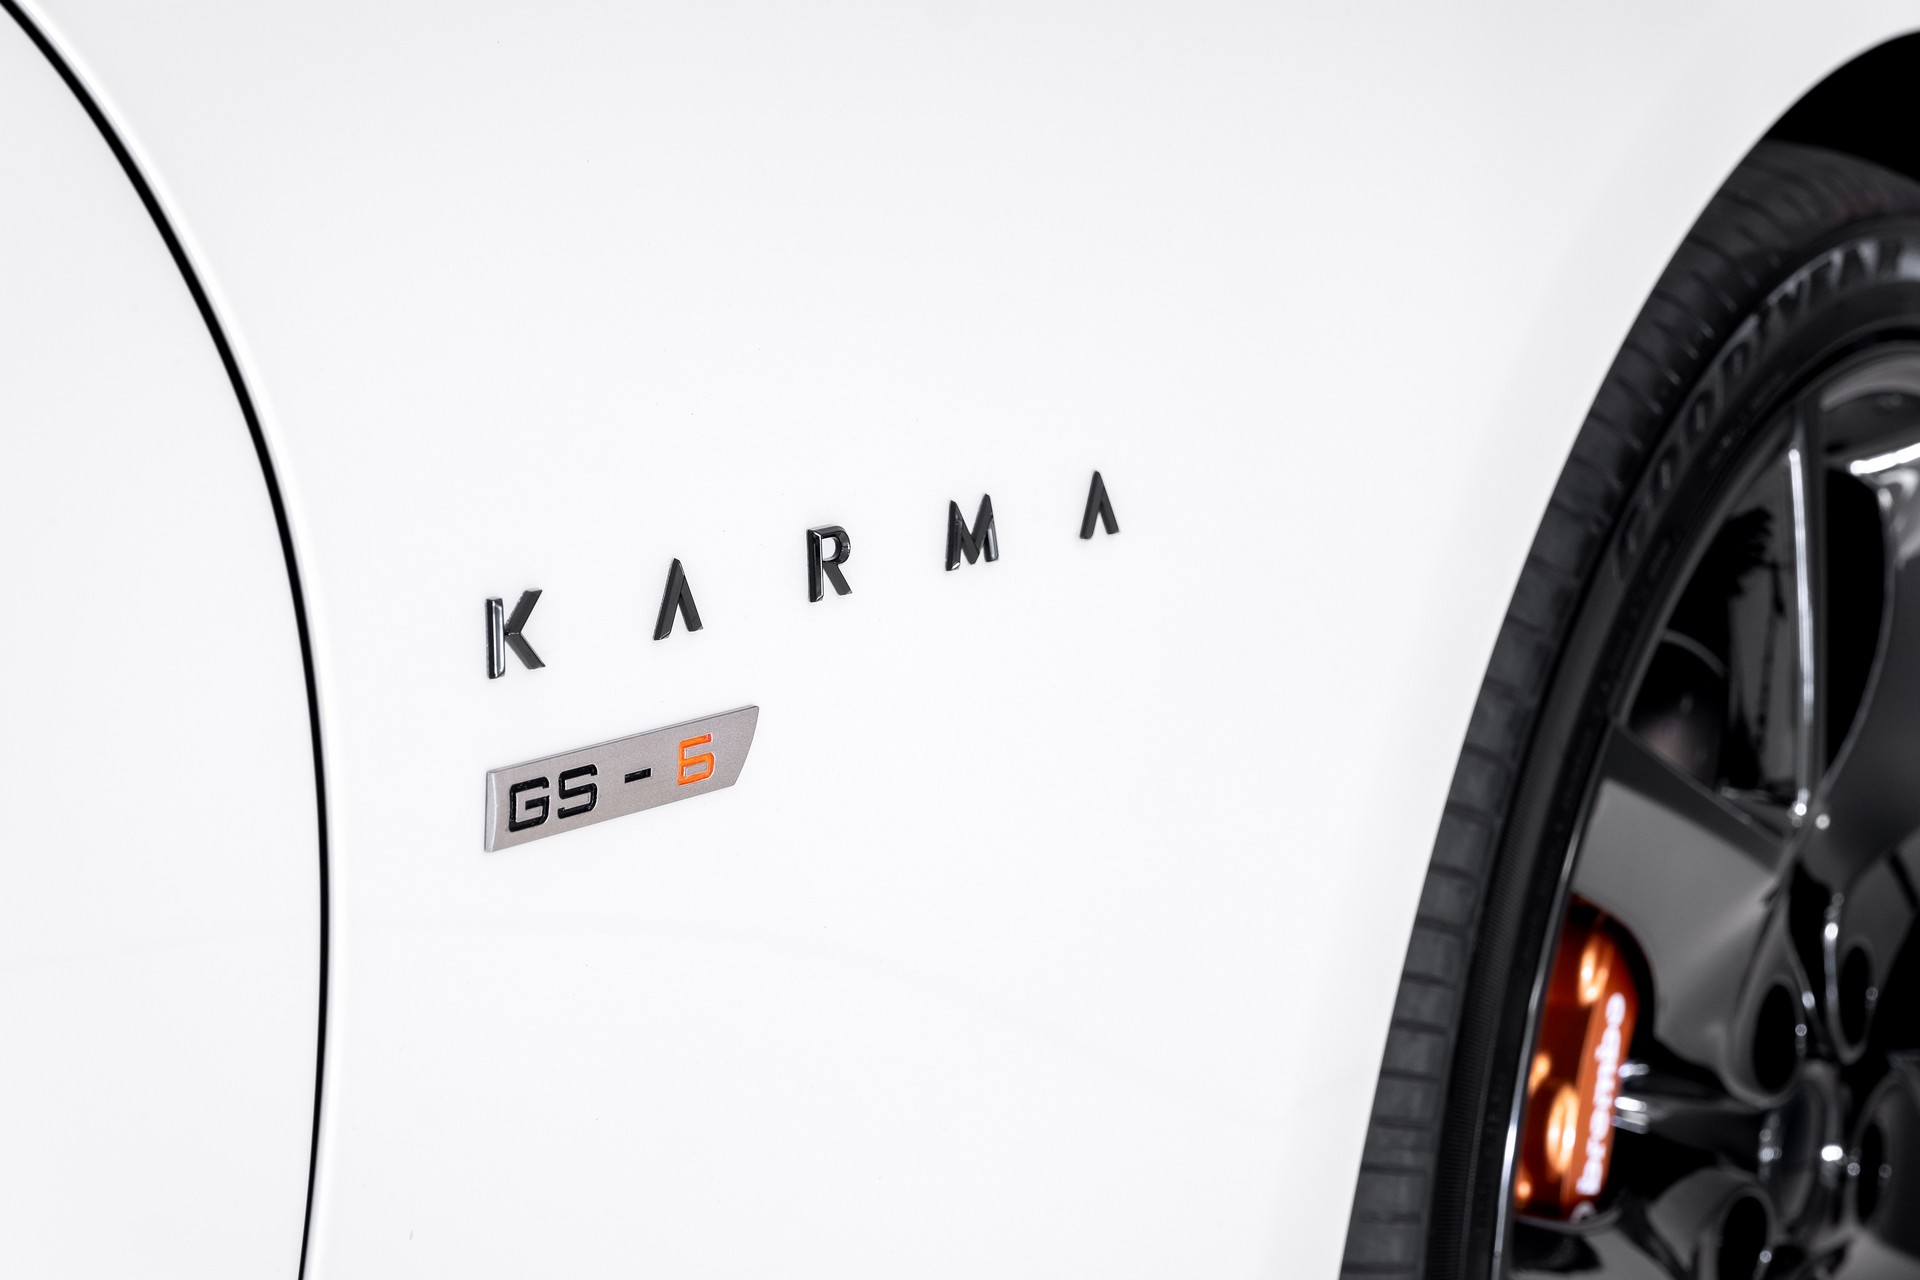 Karma GS-6 resim galerisi (23.02.2021)